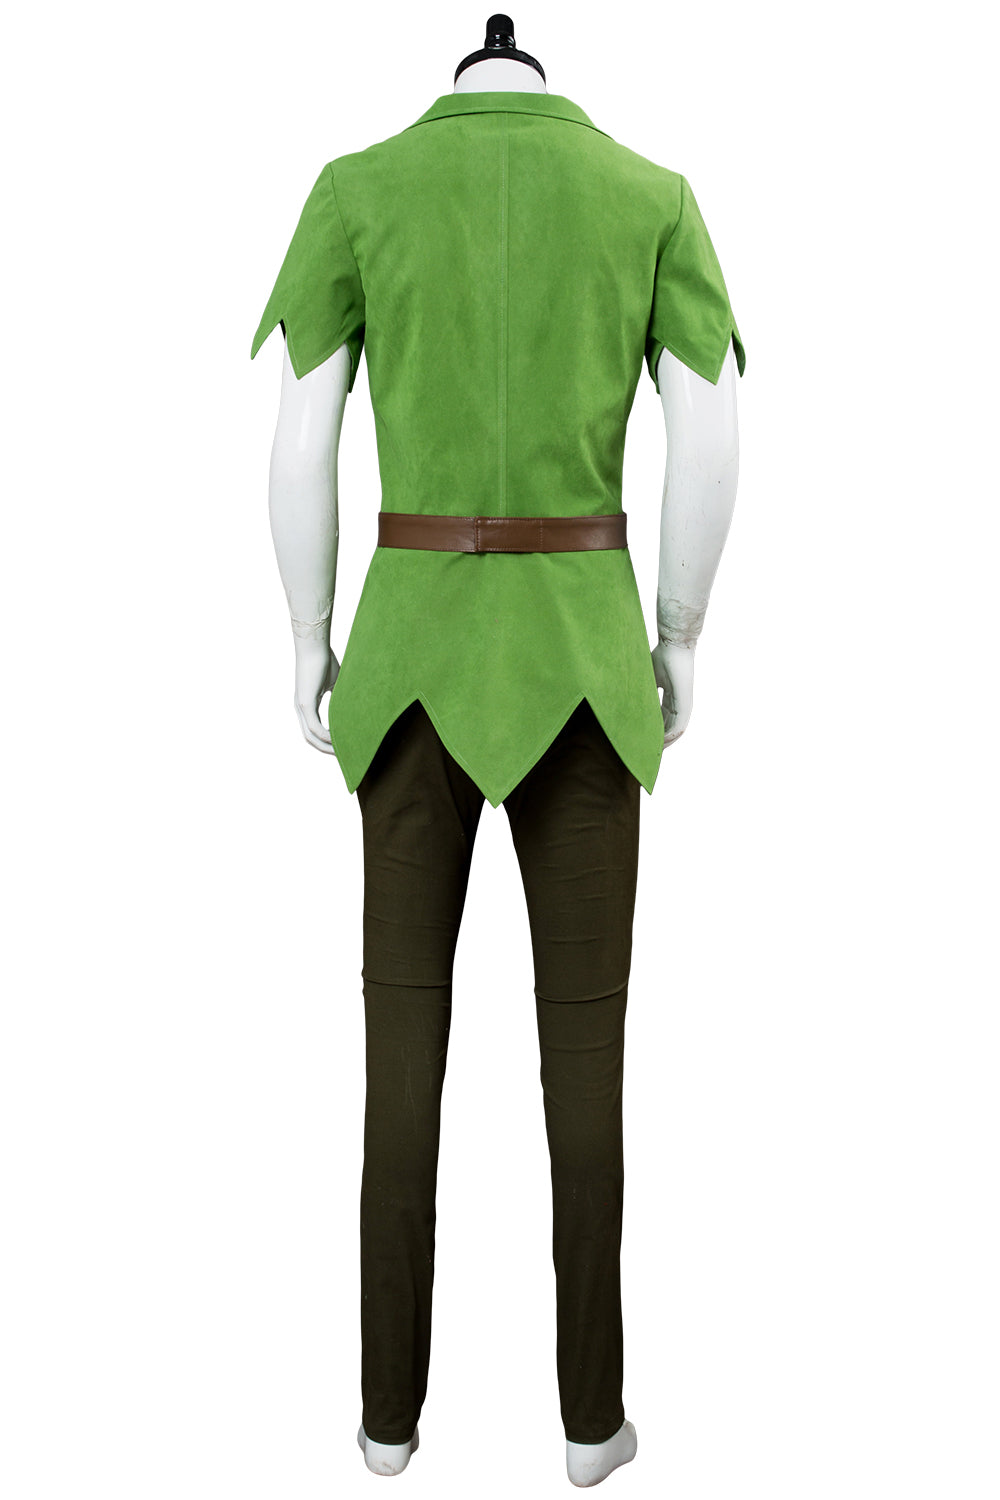 Nimmerland Peter Pan Neverland Cosplay Kostüm